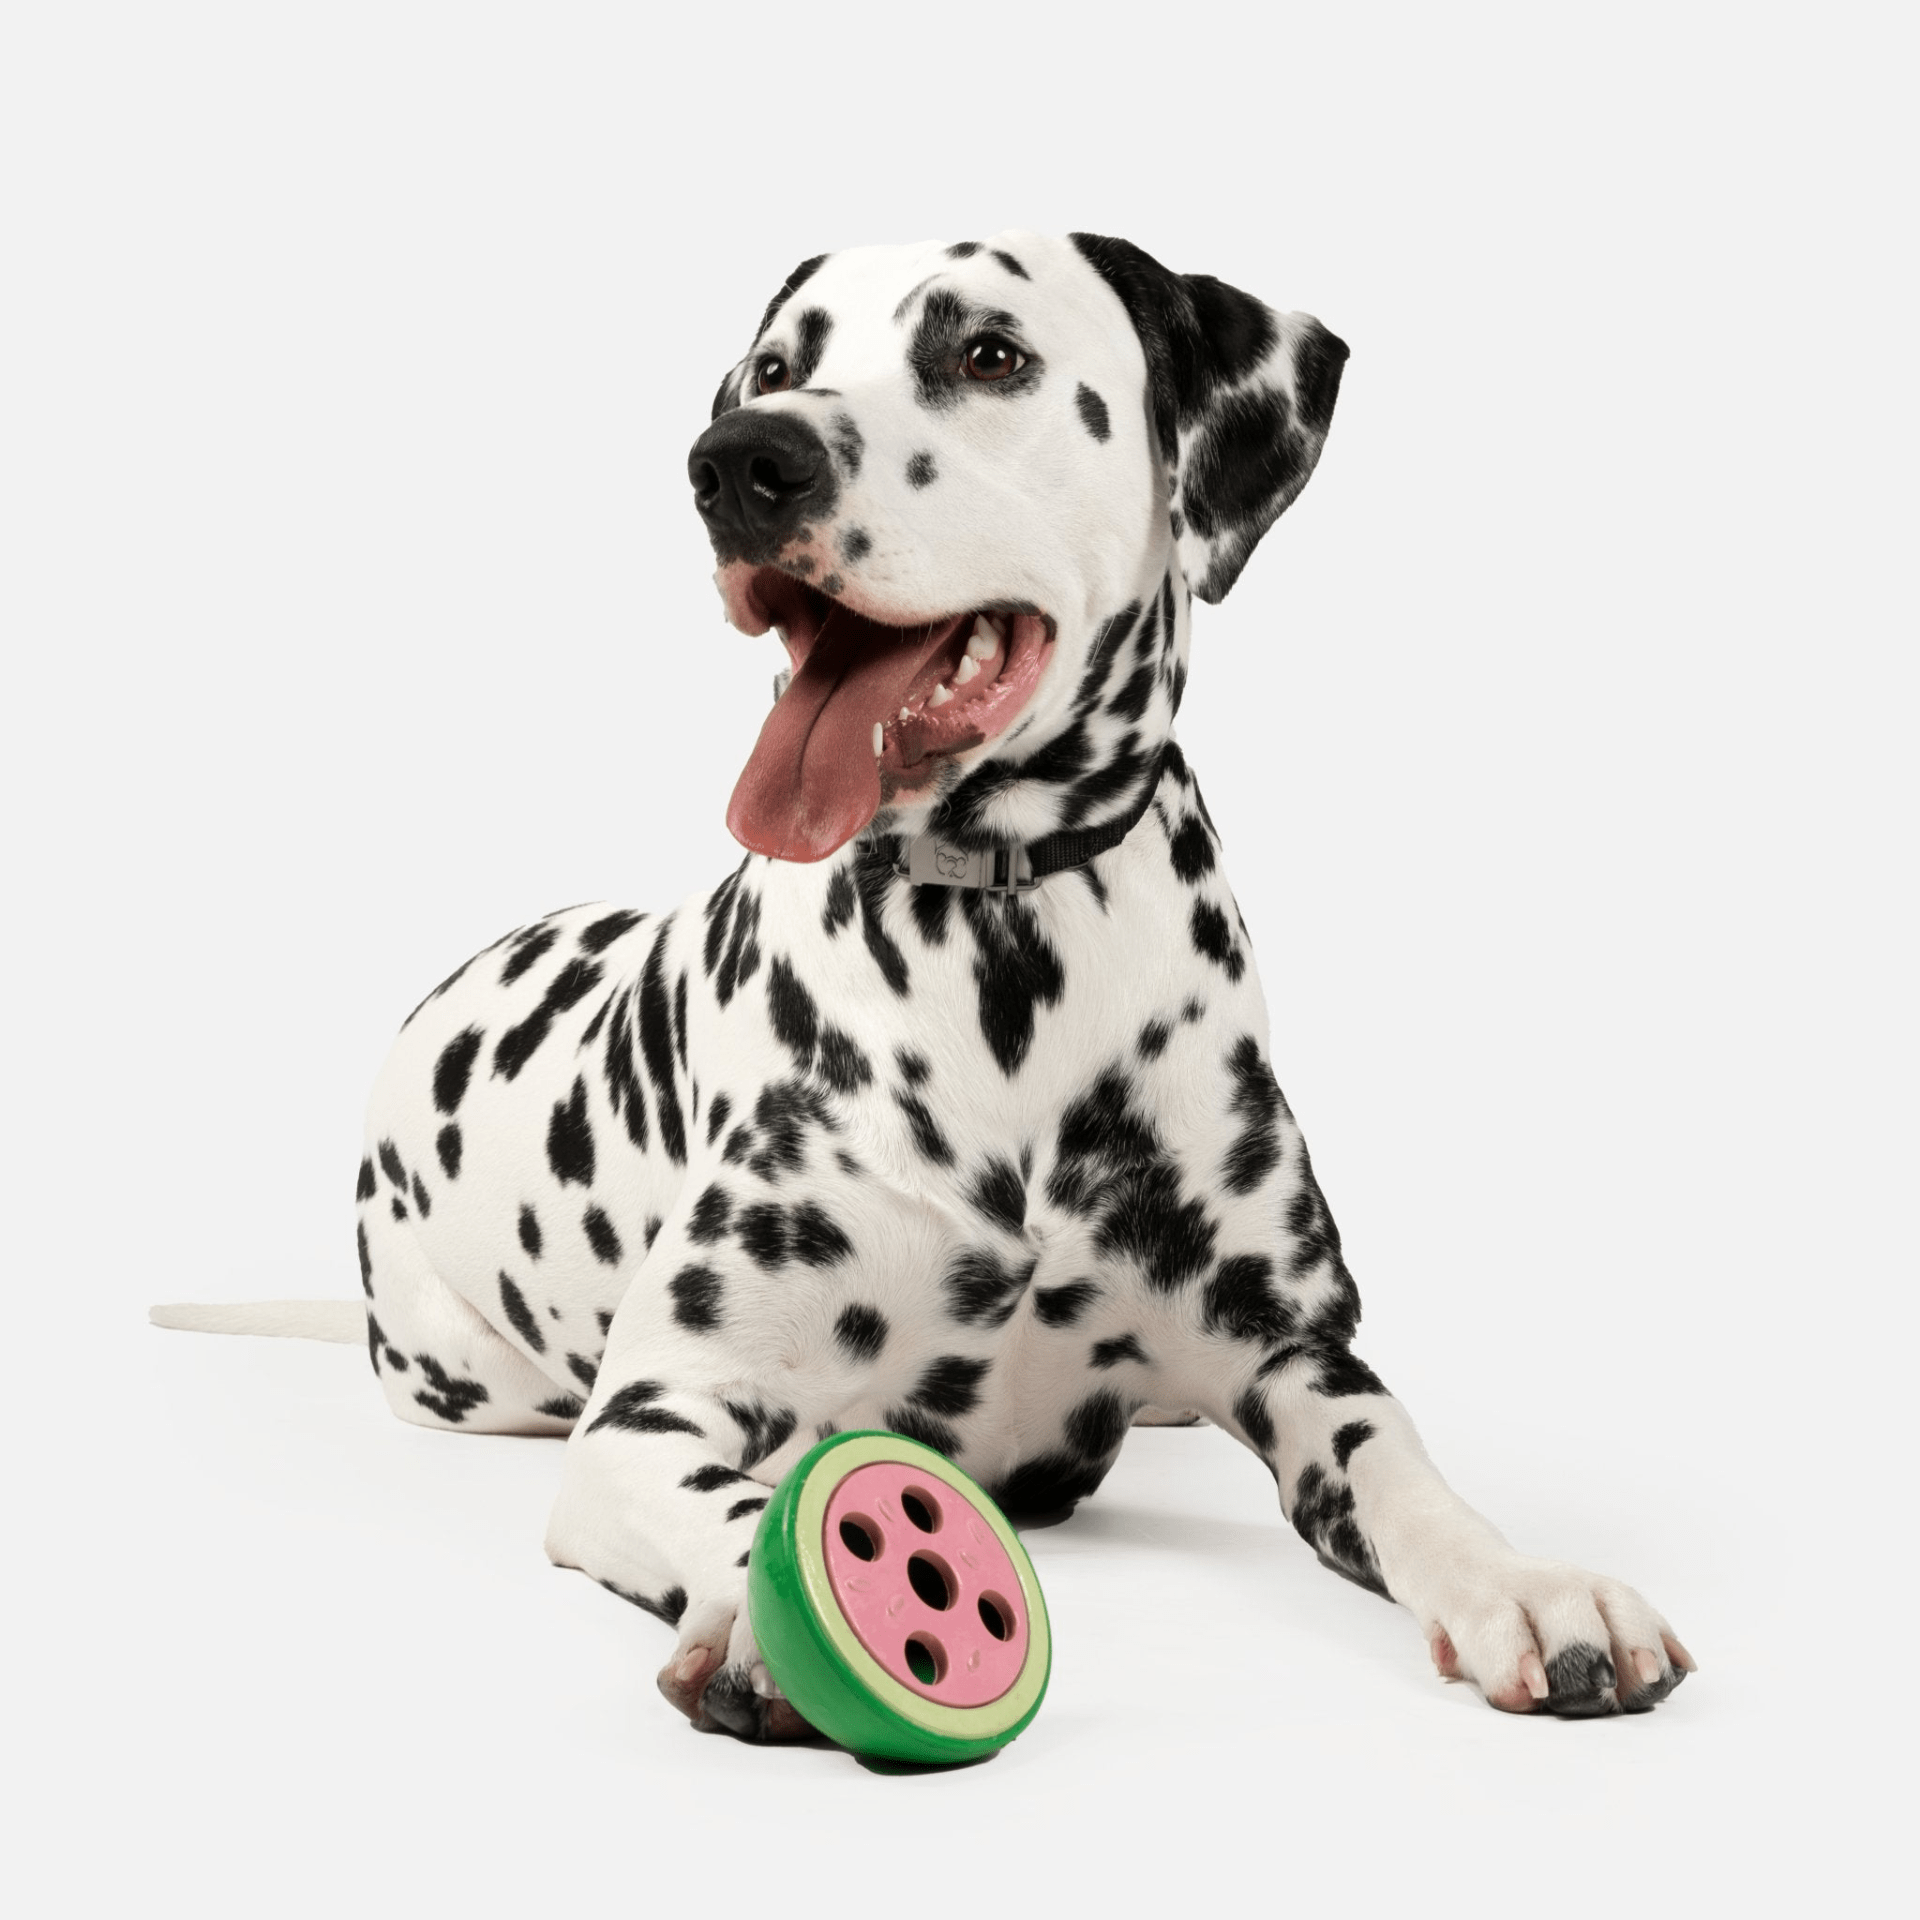 Dog and Pet Stuff Watermelon Dog Toy